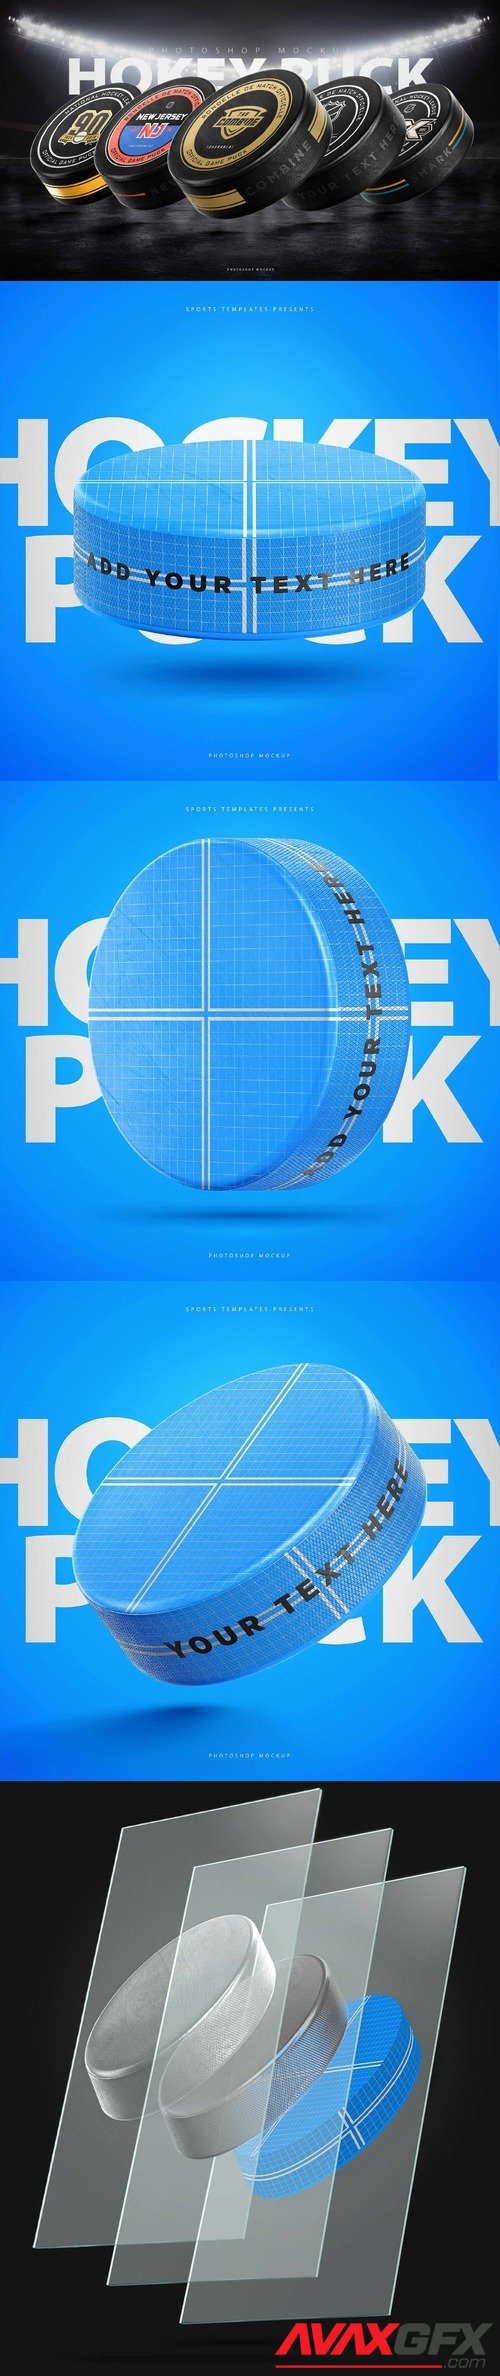 Hockey Puck Photoshop Template